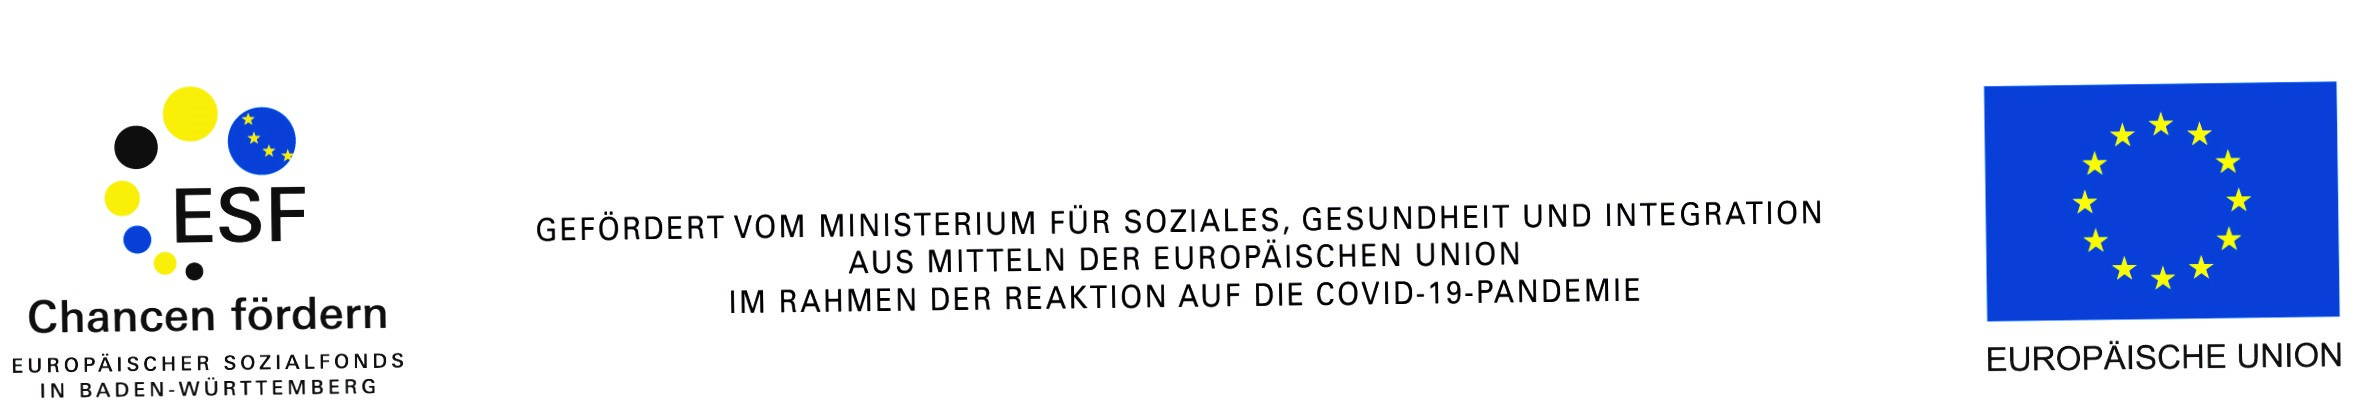 upload/BZ Esslingen/Logoreihe_SGI_REACT_20210614(2).jpg